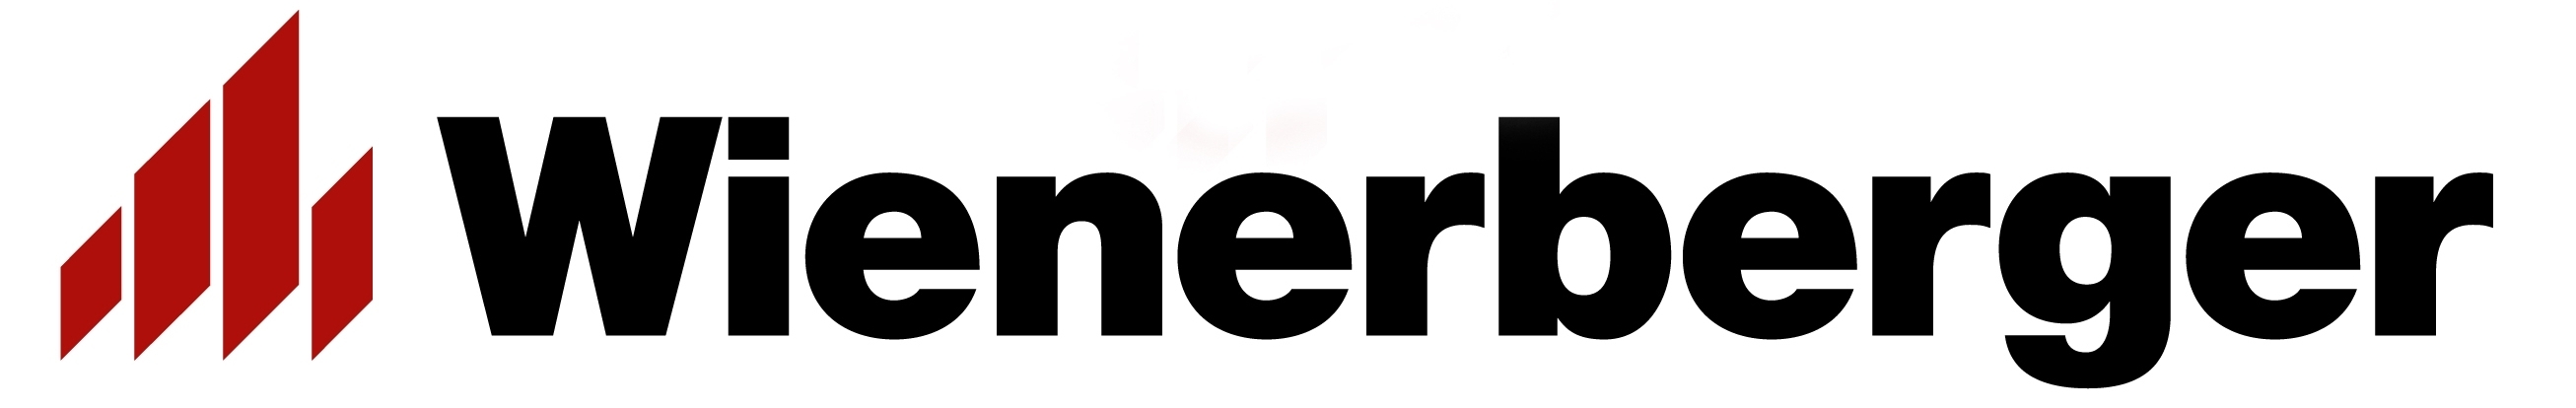 Wienerberger logo for website homepage.